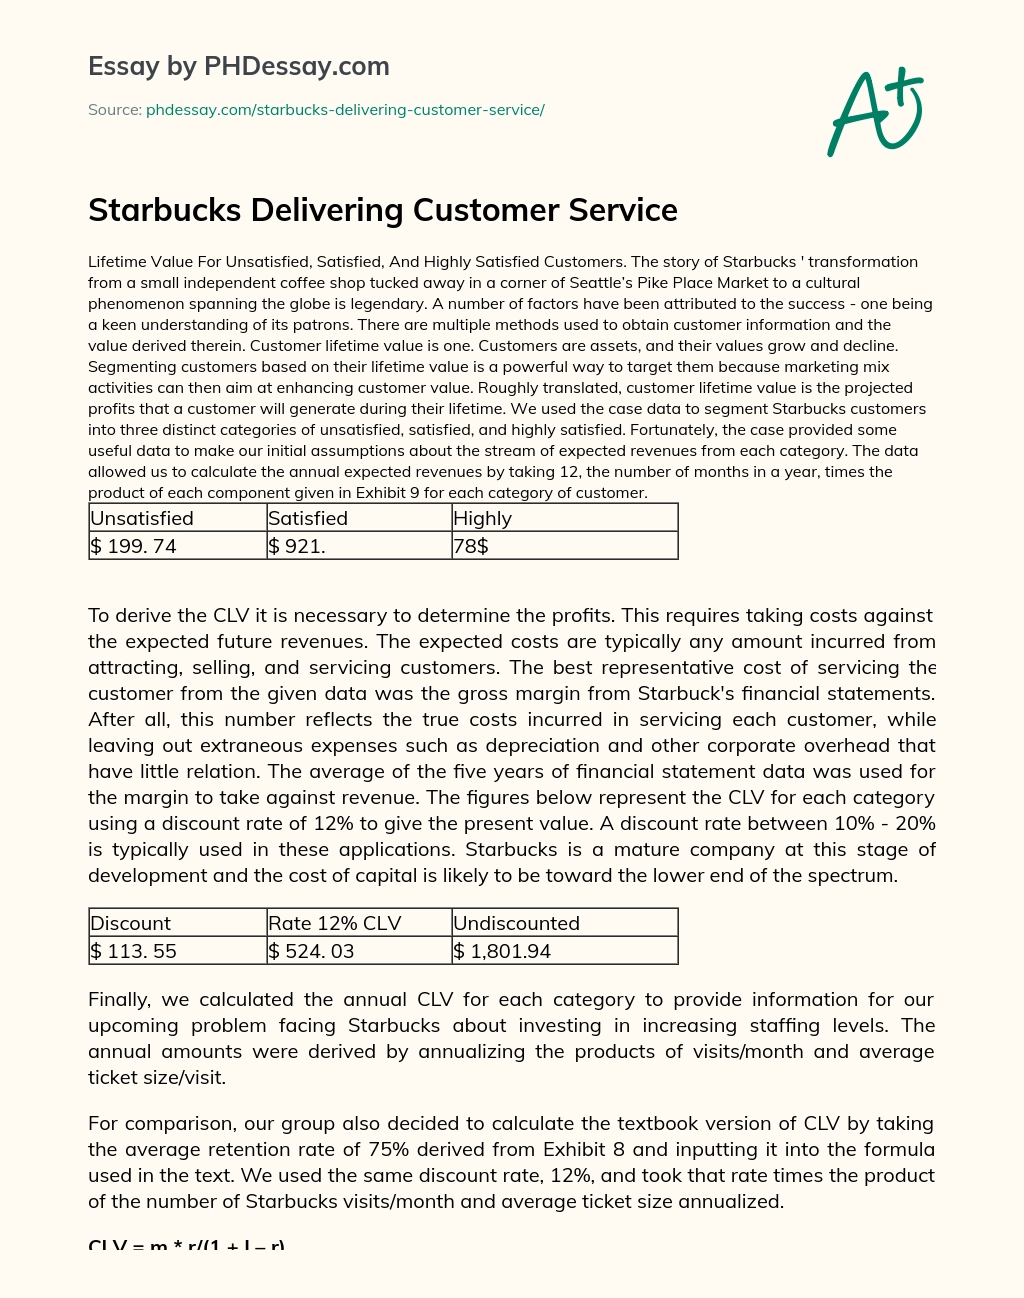 Starbucks Delivering Customer Service essay